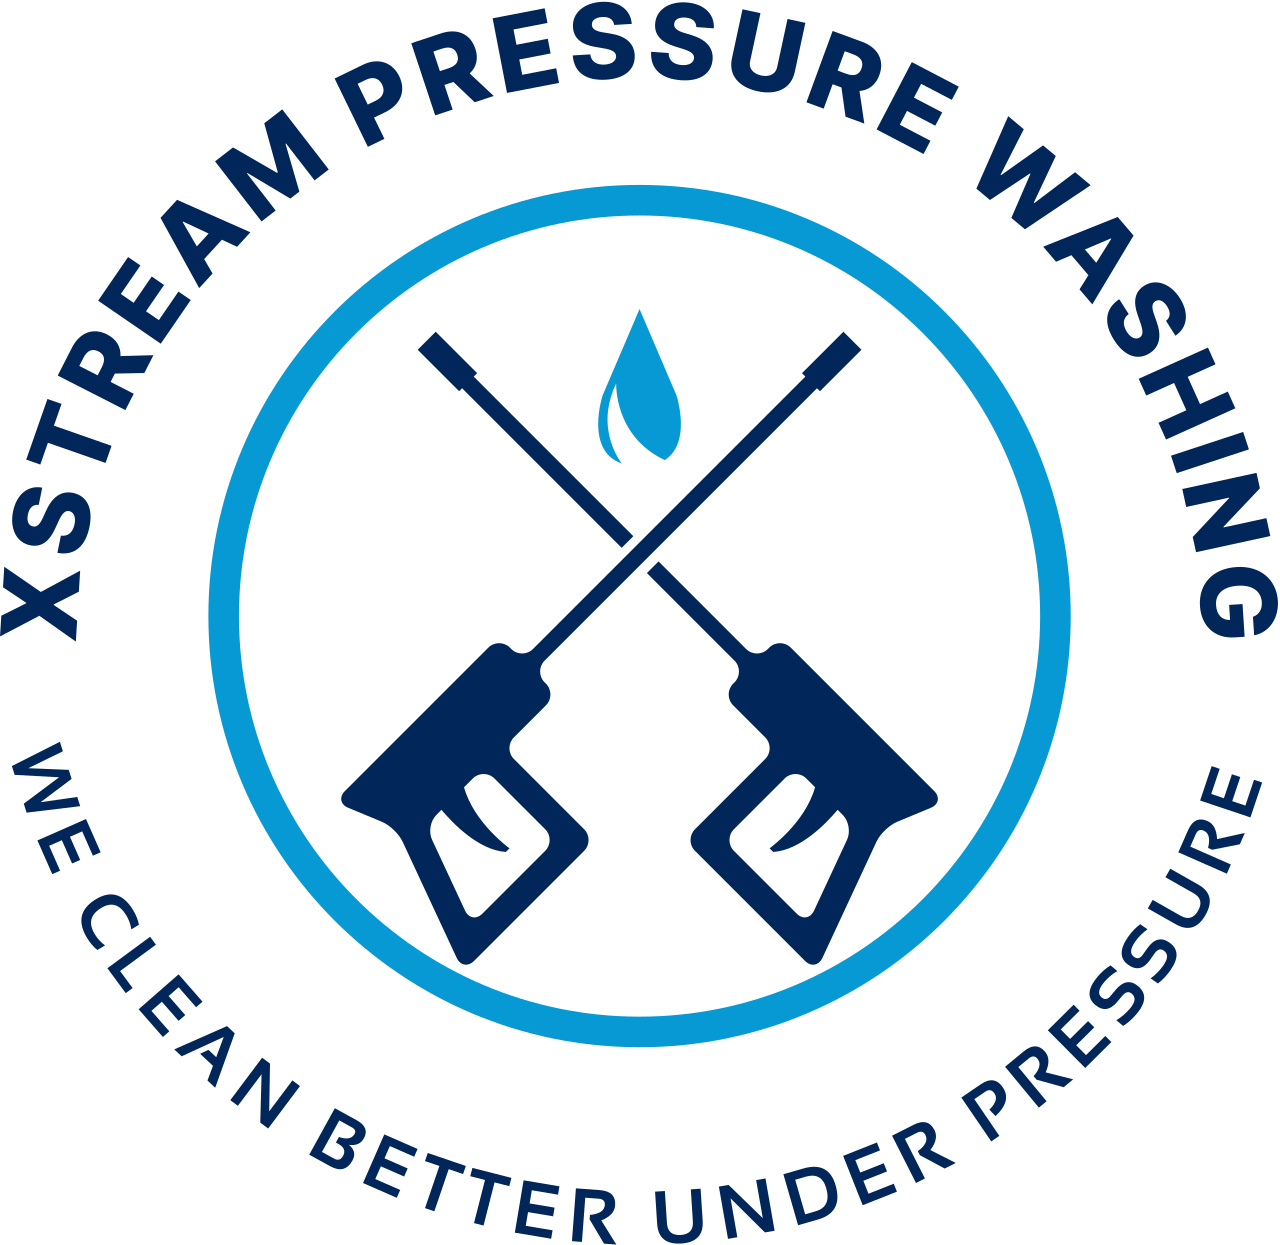 XSTREAM PRESSURE WASHING's logo